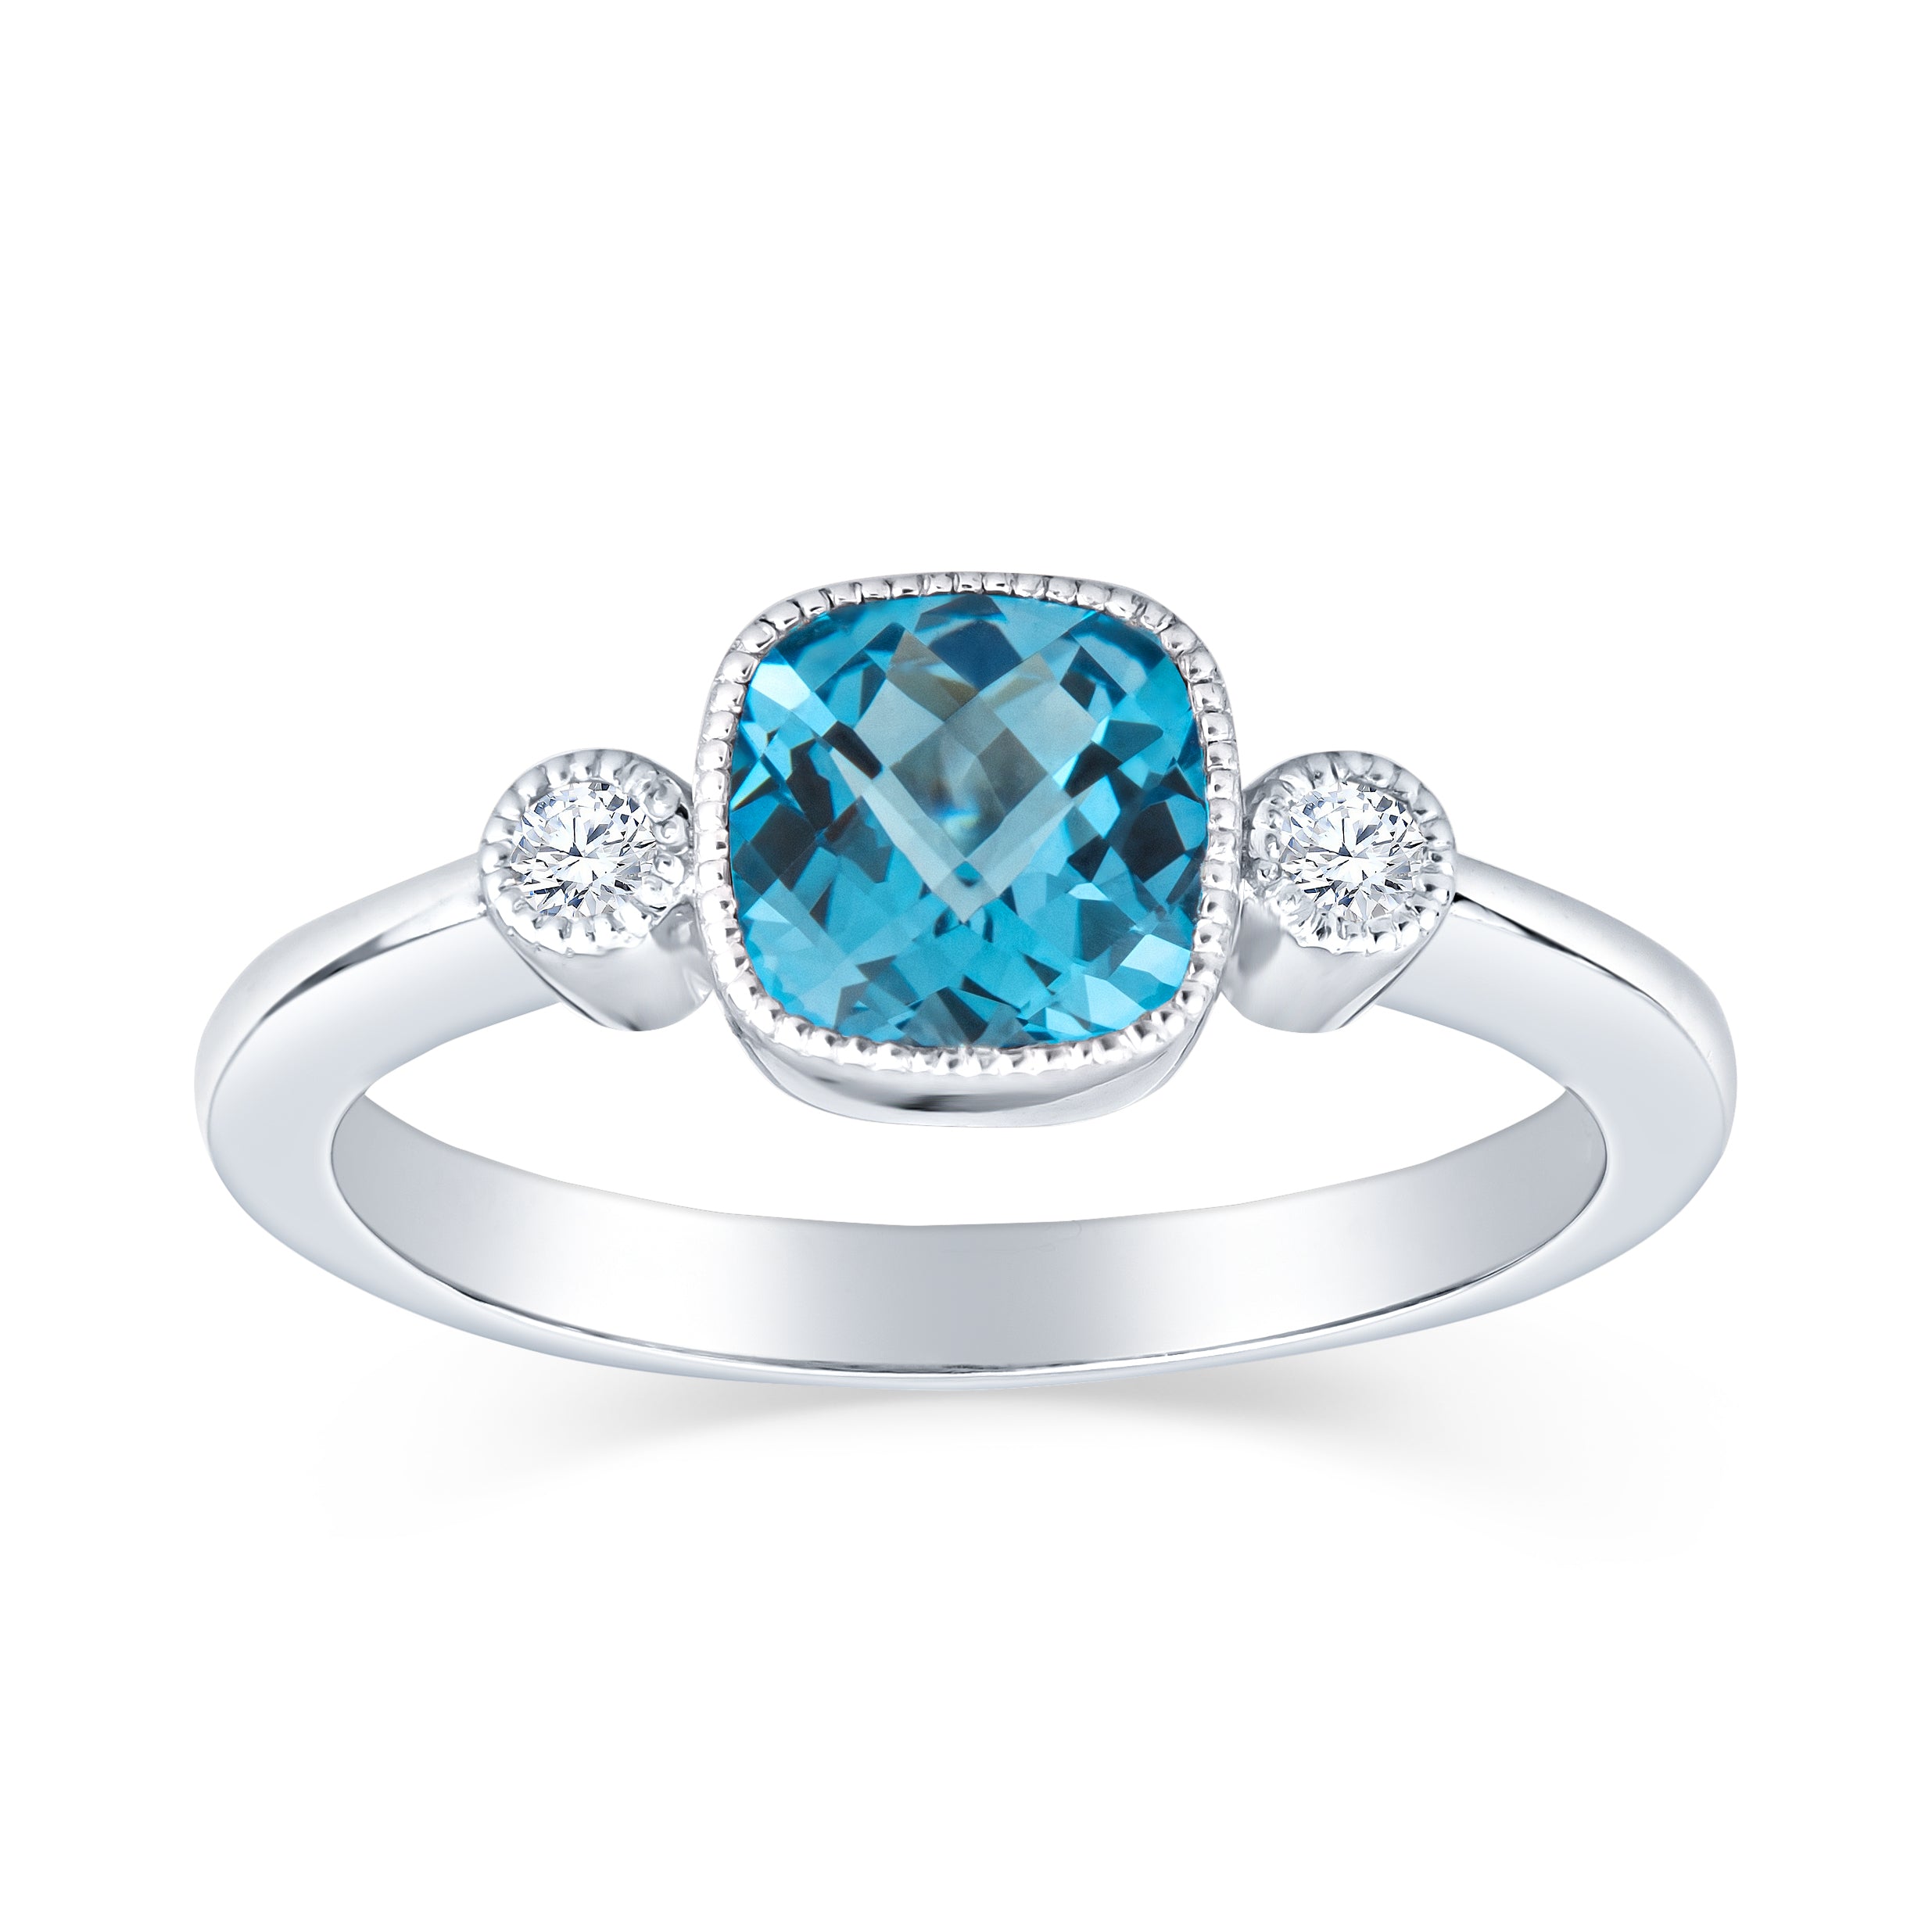 Macy's Blue Topaz Diamond Ring 14k White Gold 3.11 TCW Retail $1900 SZ7  Trending | eBay